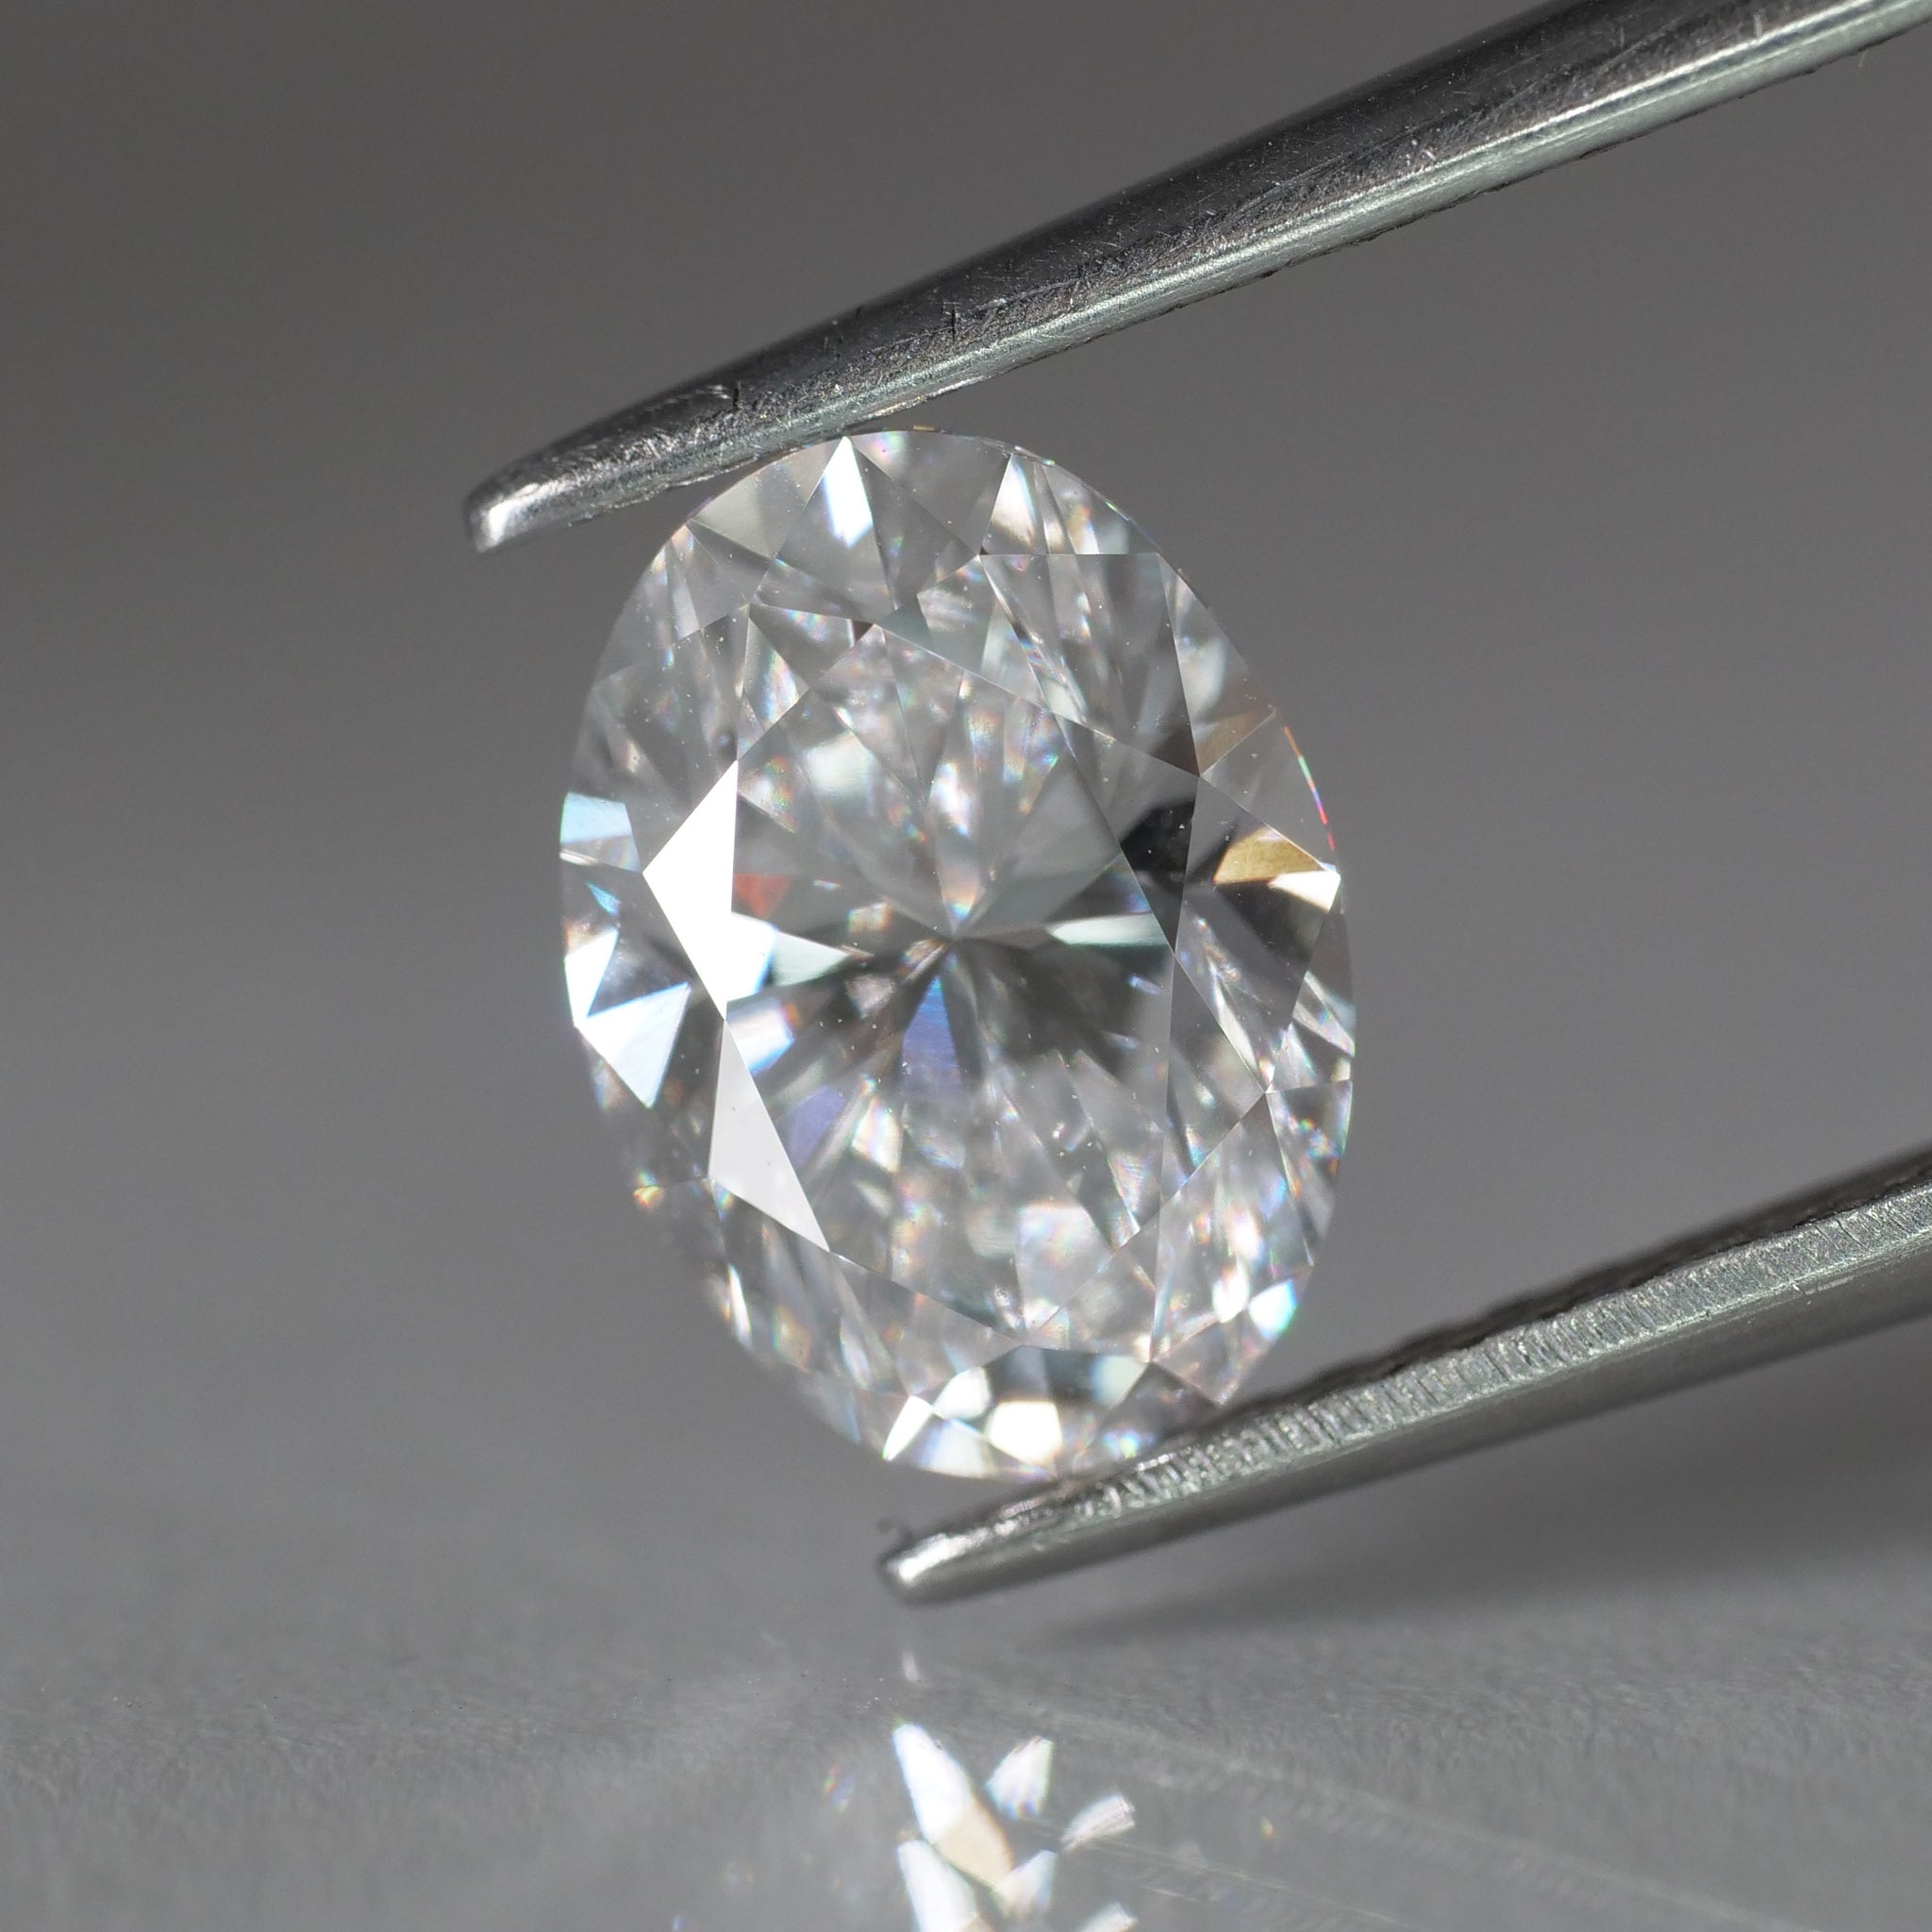 Lab grown diamond | IGI certificate, oval cut 9.24x6.67mm, D color, VVS2, 1.81ct - Eden Garden Jewelry™